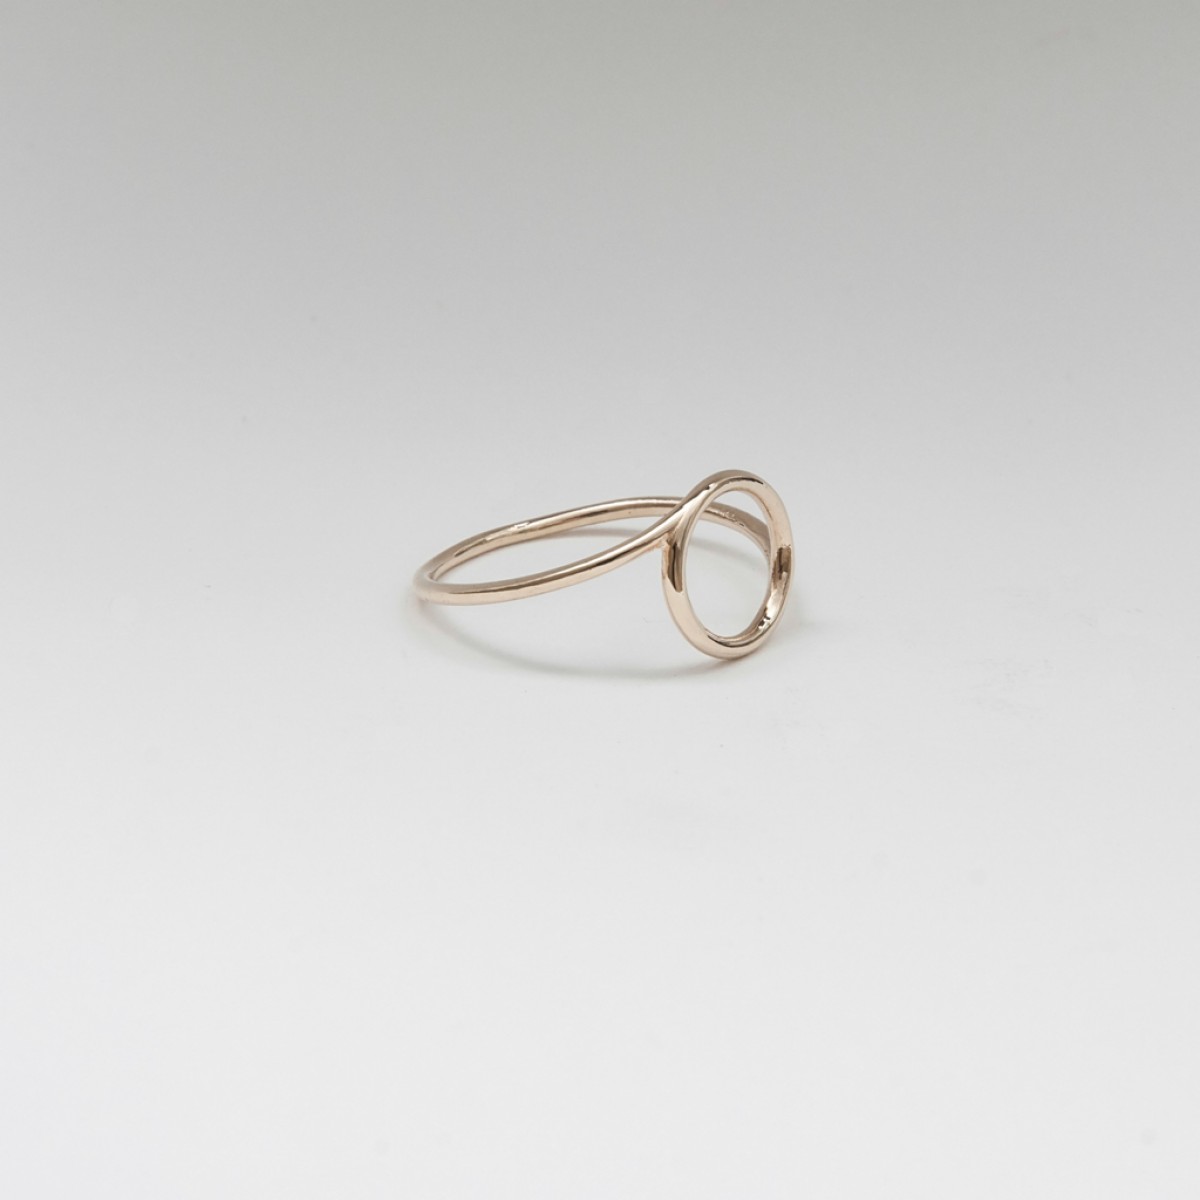 Jonathan Radetz Jewellery, Ring SPIRAL, Gold 375